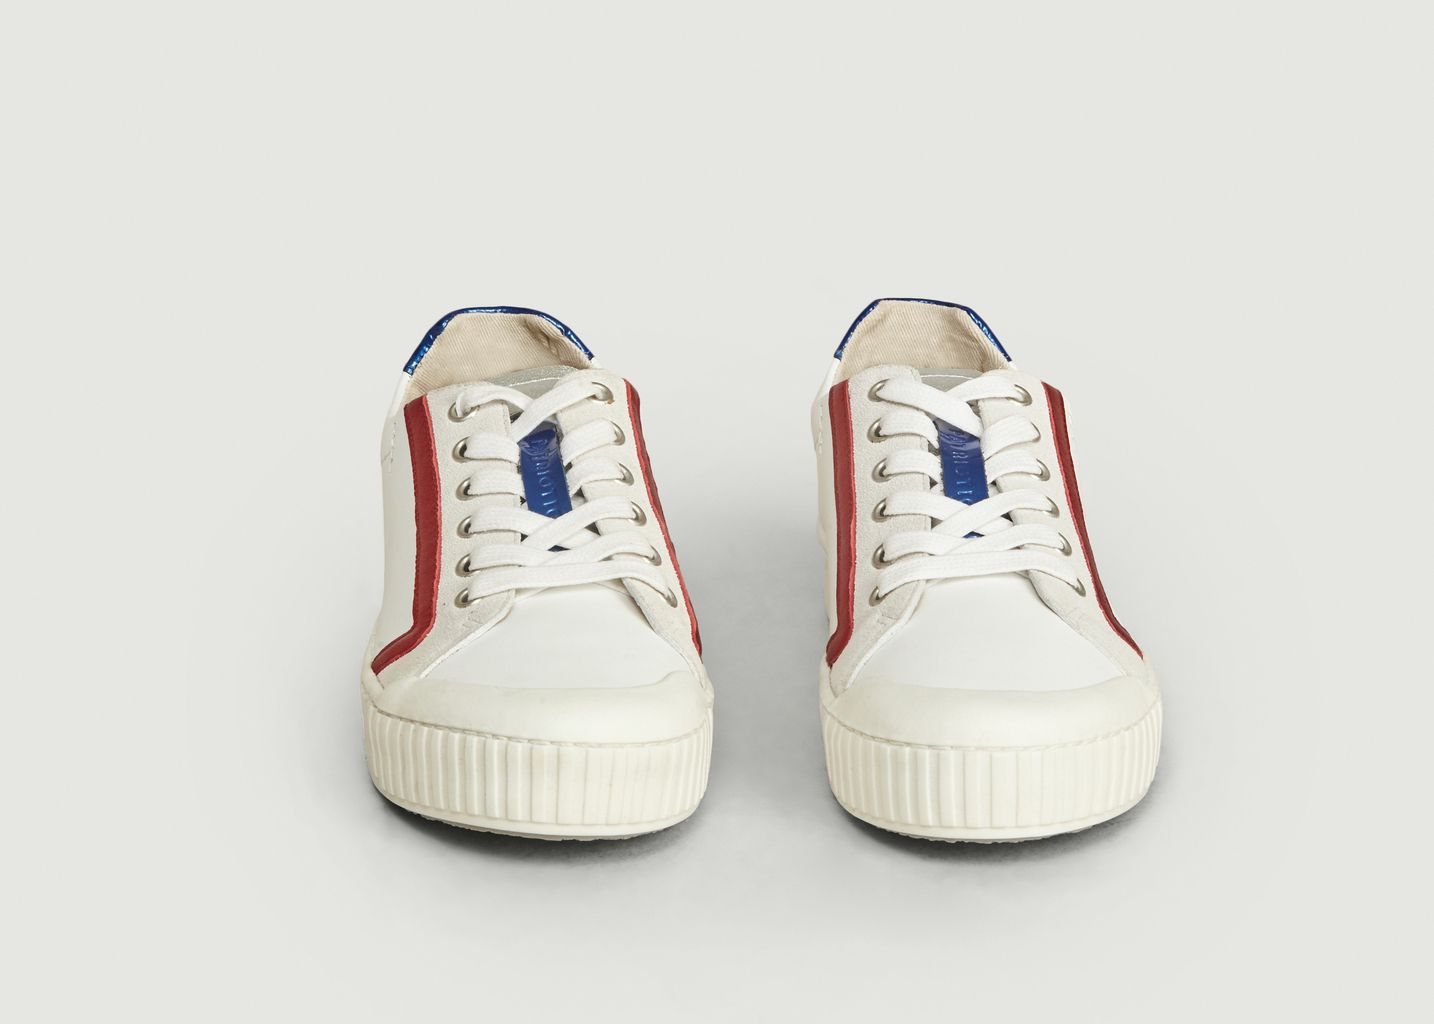 X-Delta Run Sneakers - Patriotic